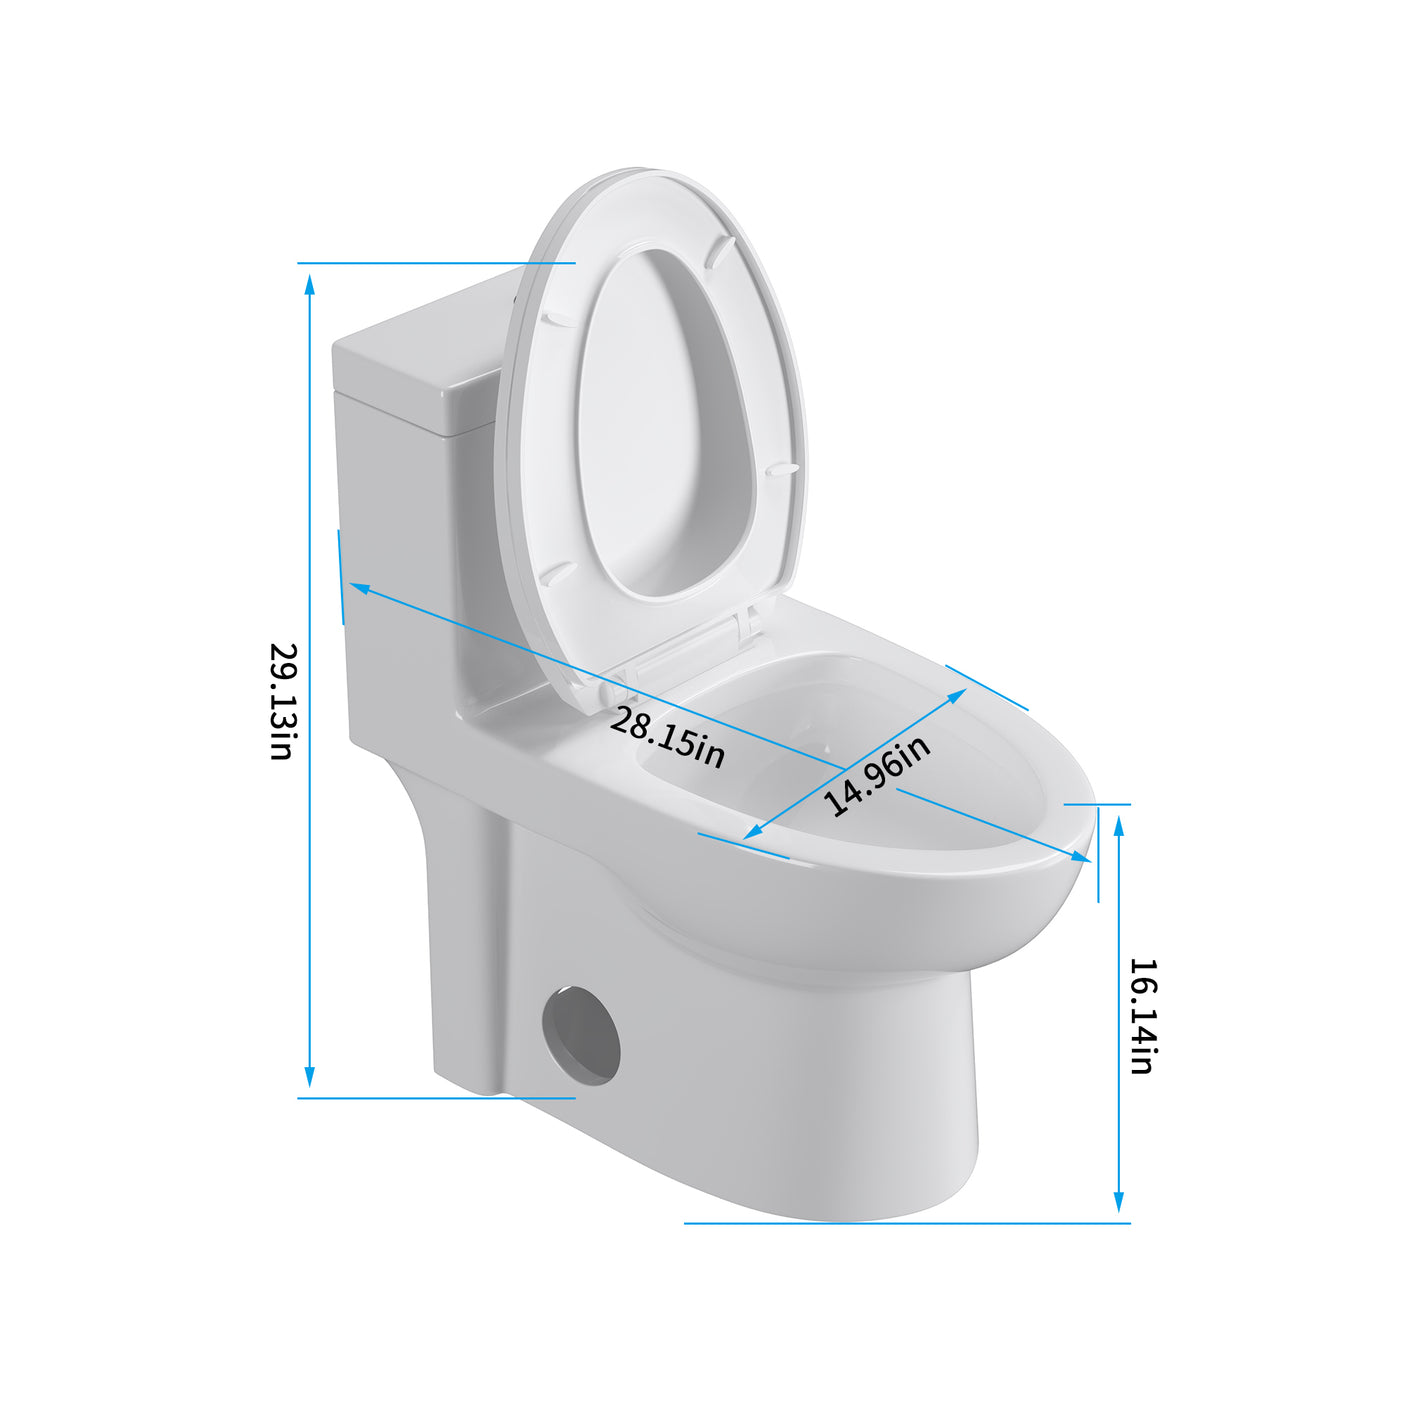 1.1/1.6 GPF Dual Flush Elongated One-Piece Toilet Floor Mount